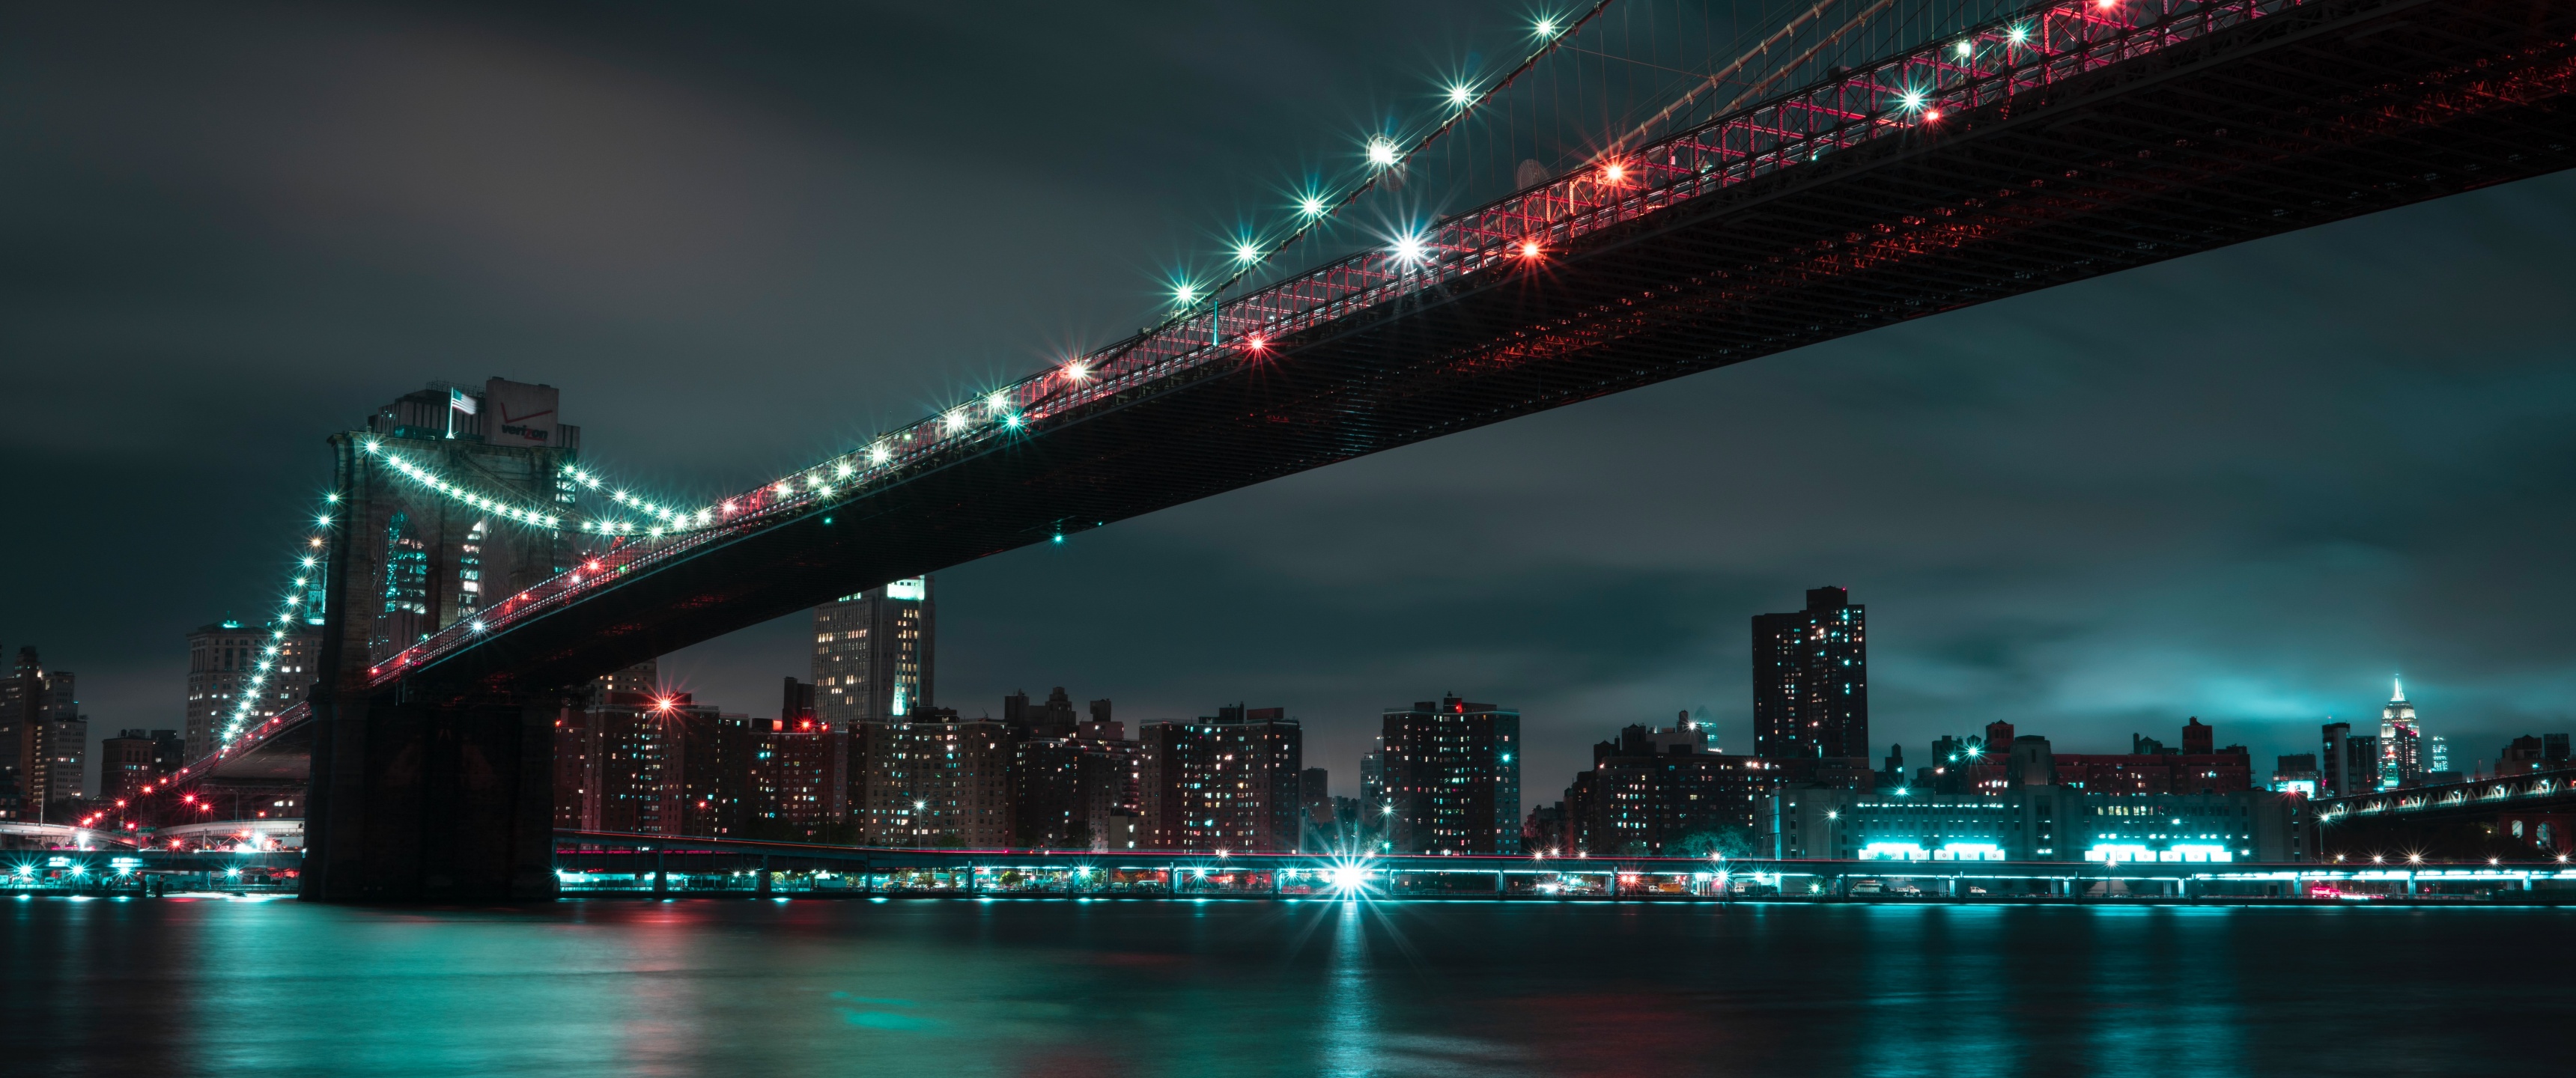 500 Brooklyn Bridge Pictures  Download Free Images on Unsplash